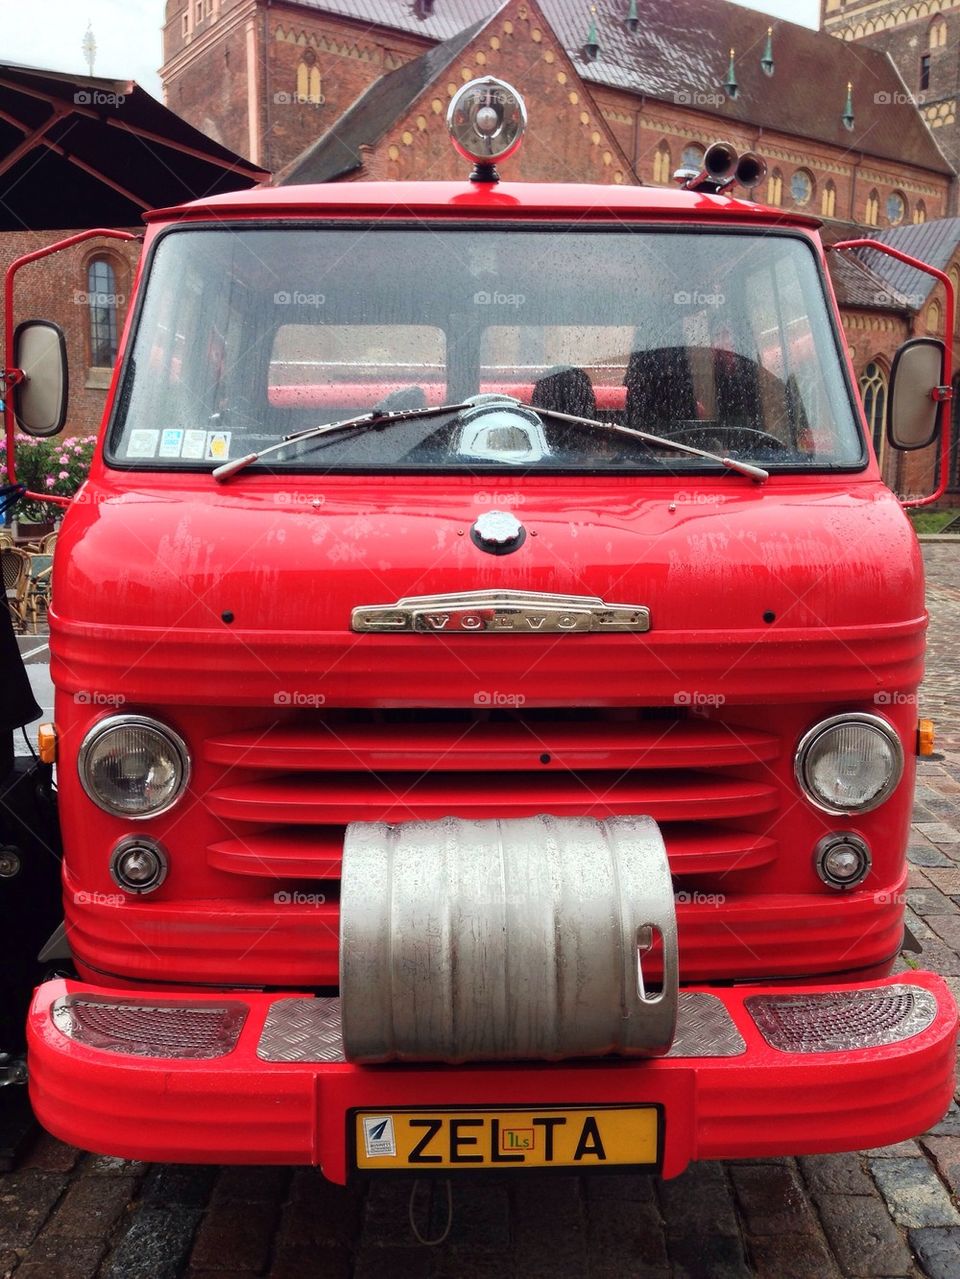 Red Volvo truck